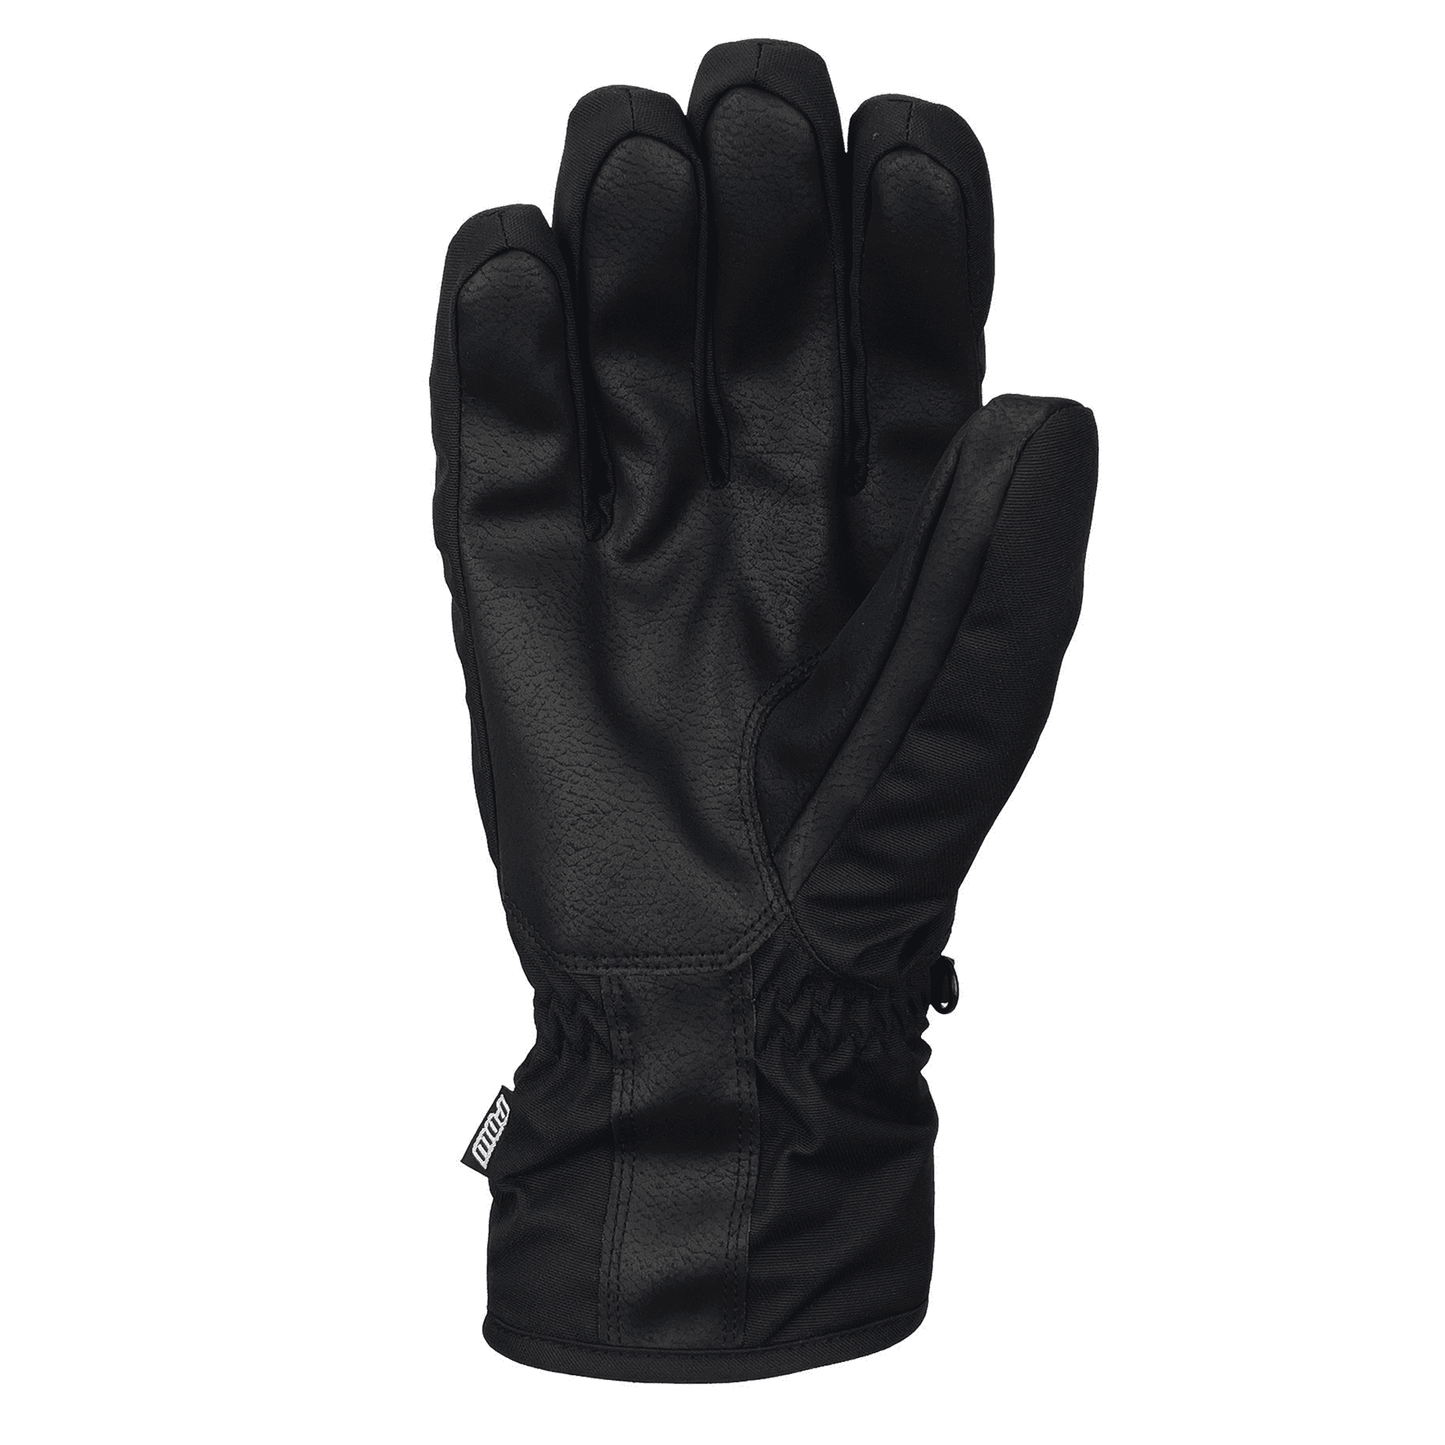 POW Gloves - Zero 2.0 Ski / Snowboard Glove